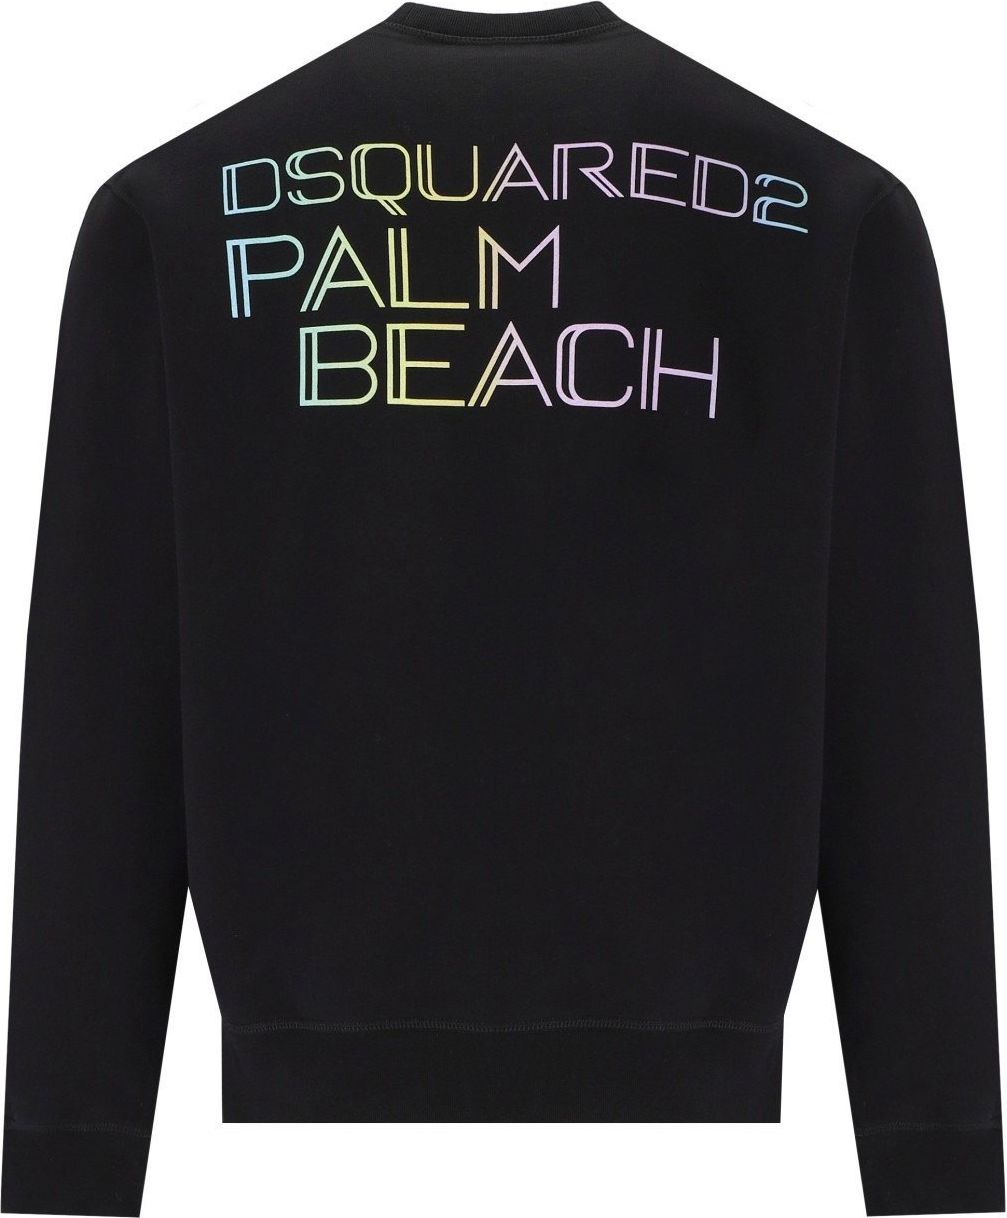 Dsquared2 Palm Beach Cool Fit Black Sweatshirt Black Zwart